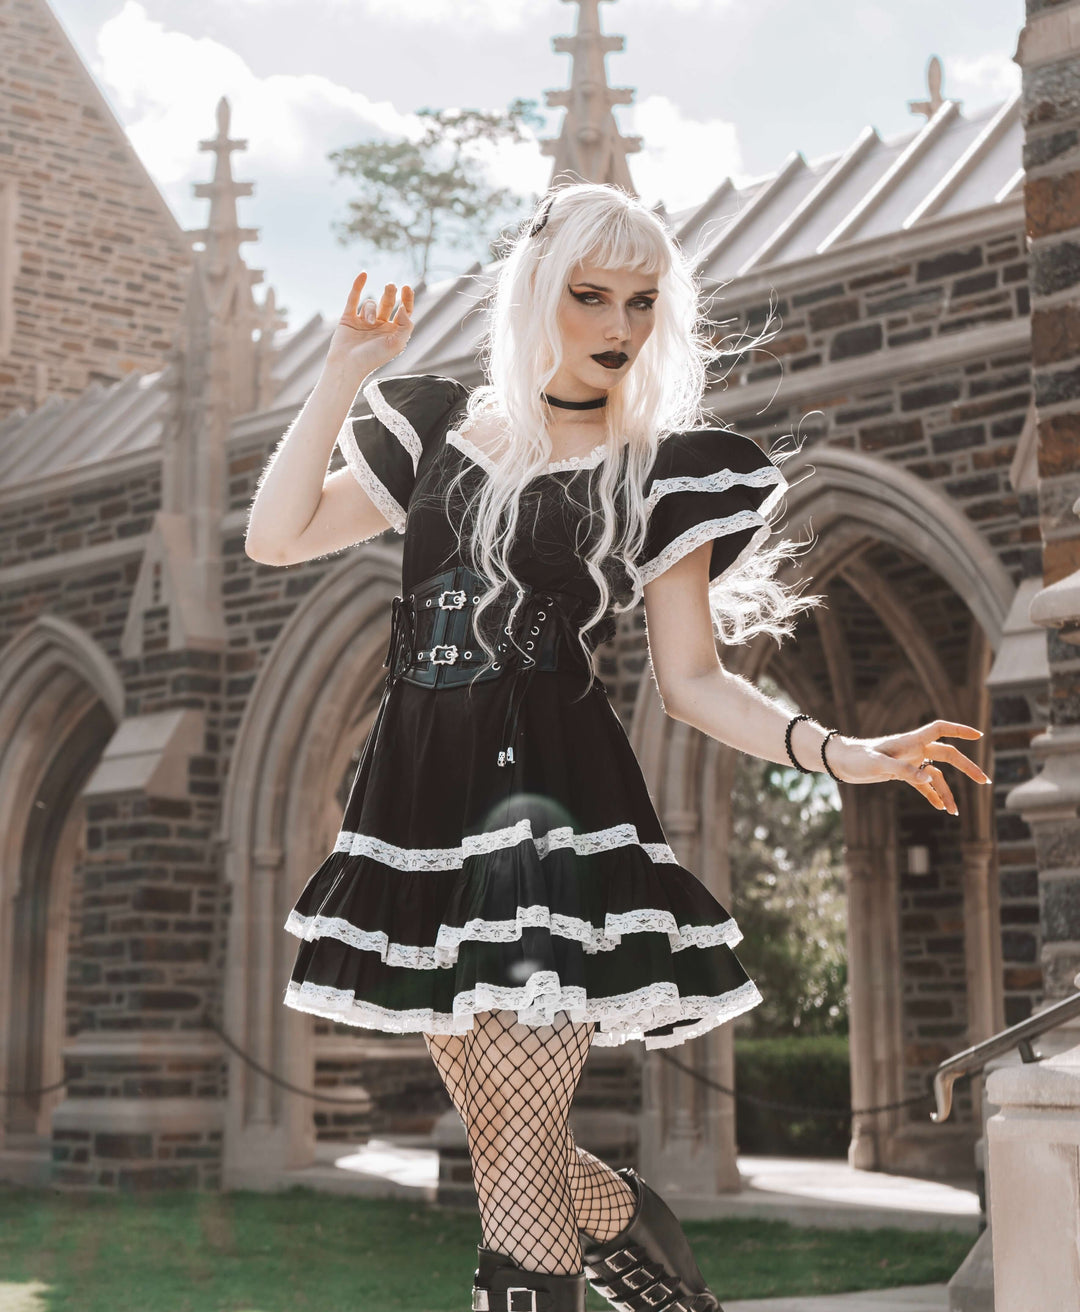 Adelaide Mini Swing dress in Black w/White Lace